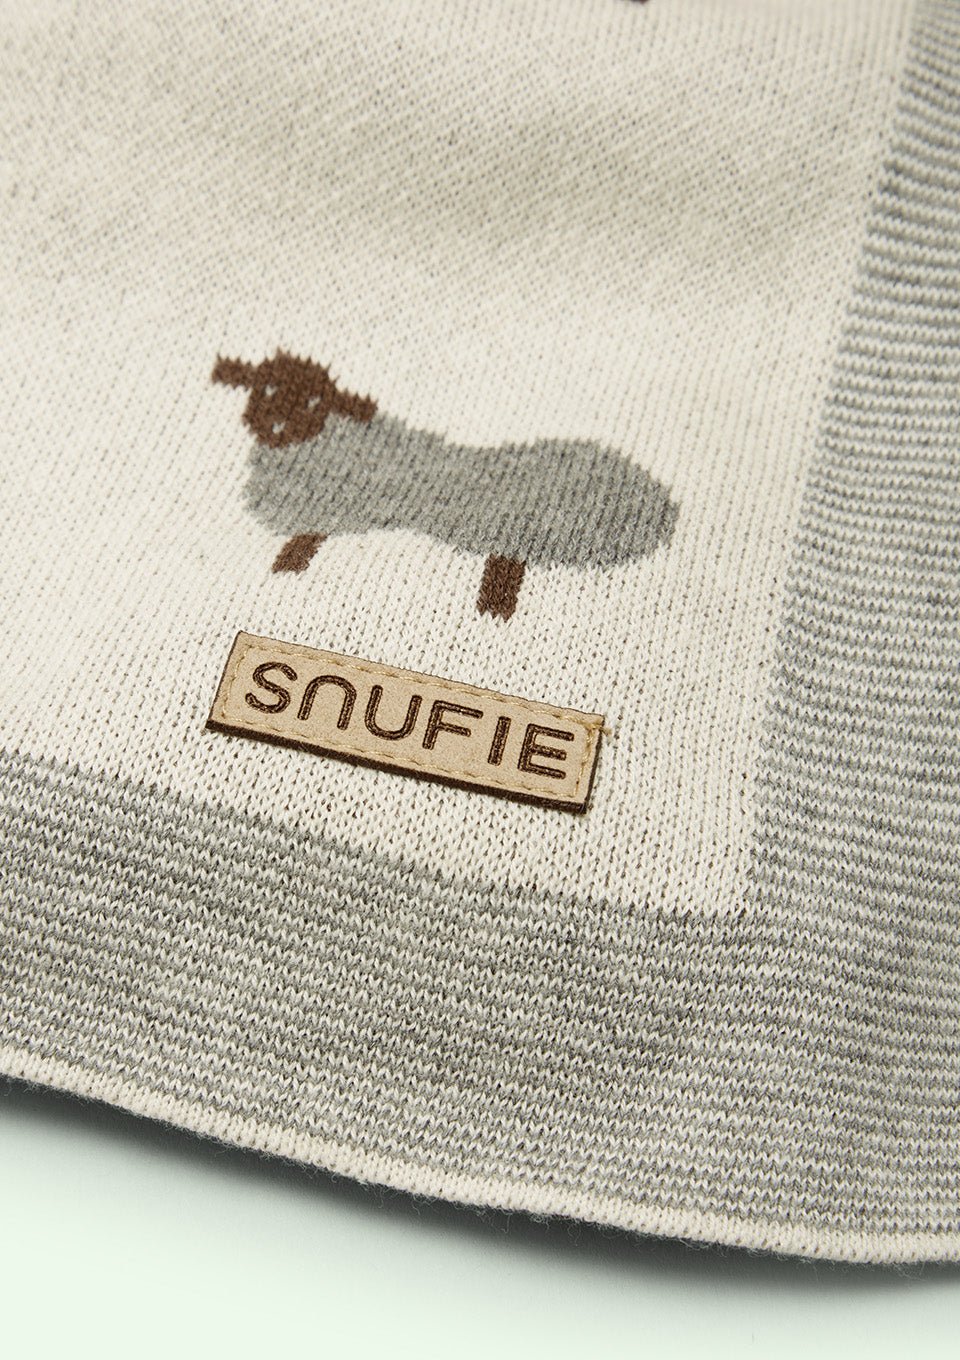 Snufie Baby-Decke "Schaf" weiß - tiny-boon.com